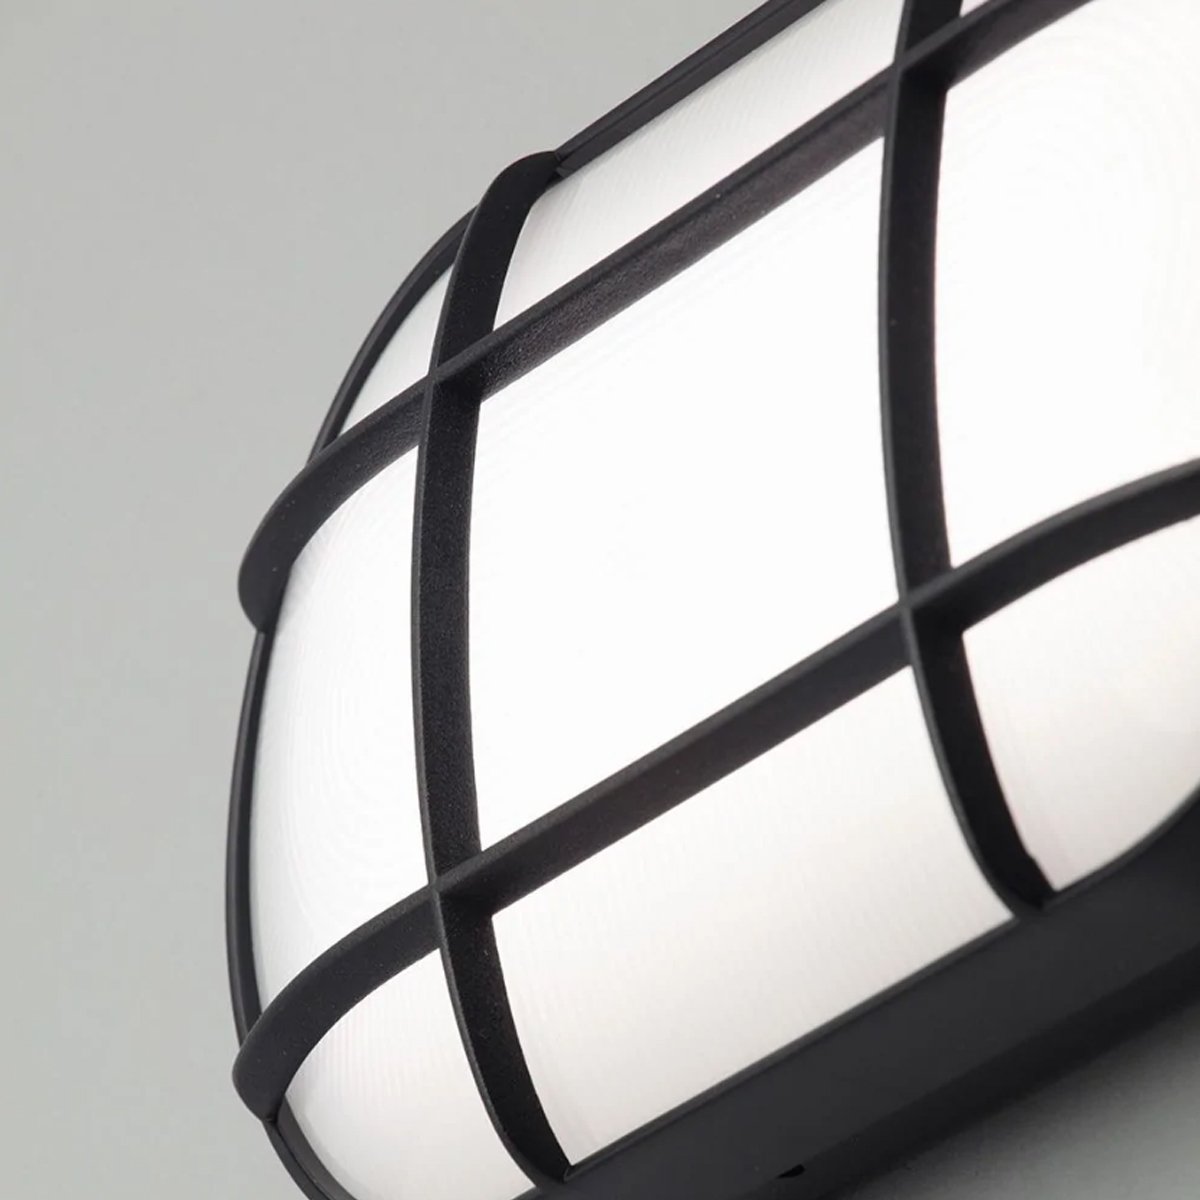 CGC VENUS Oval Medium Monochrome Grid LED Outdoor Wall Light